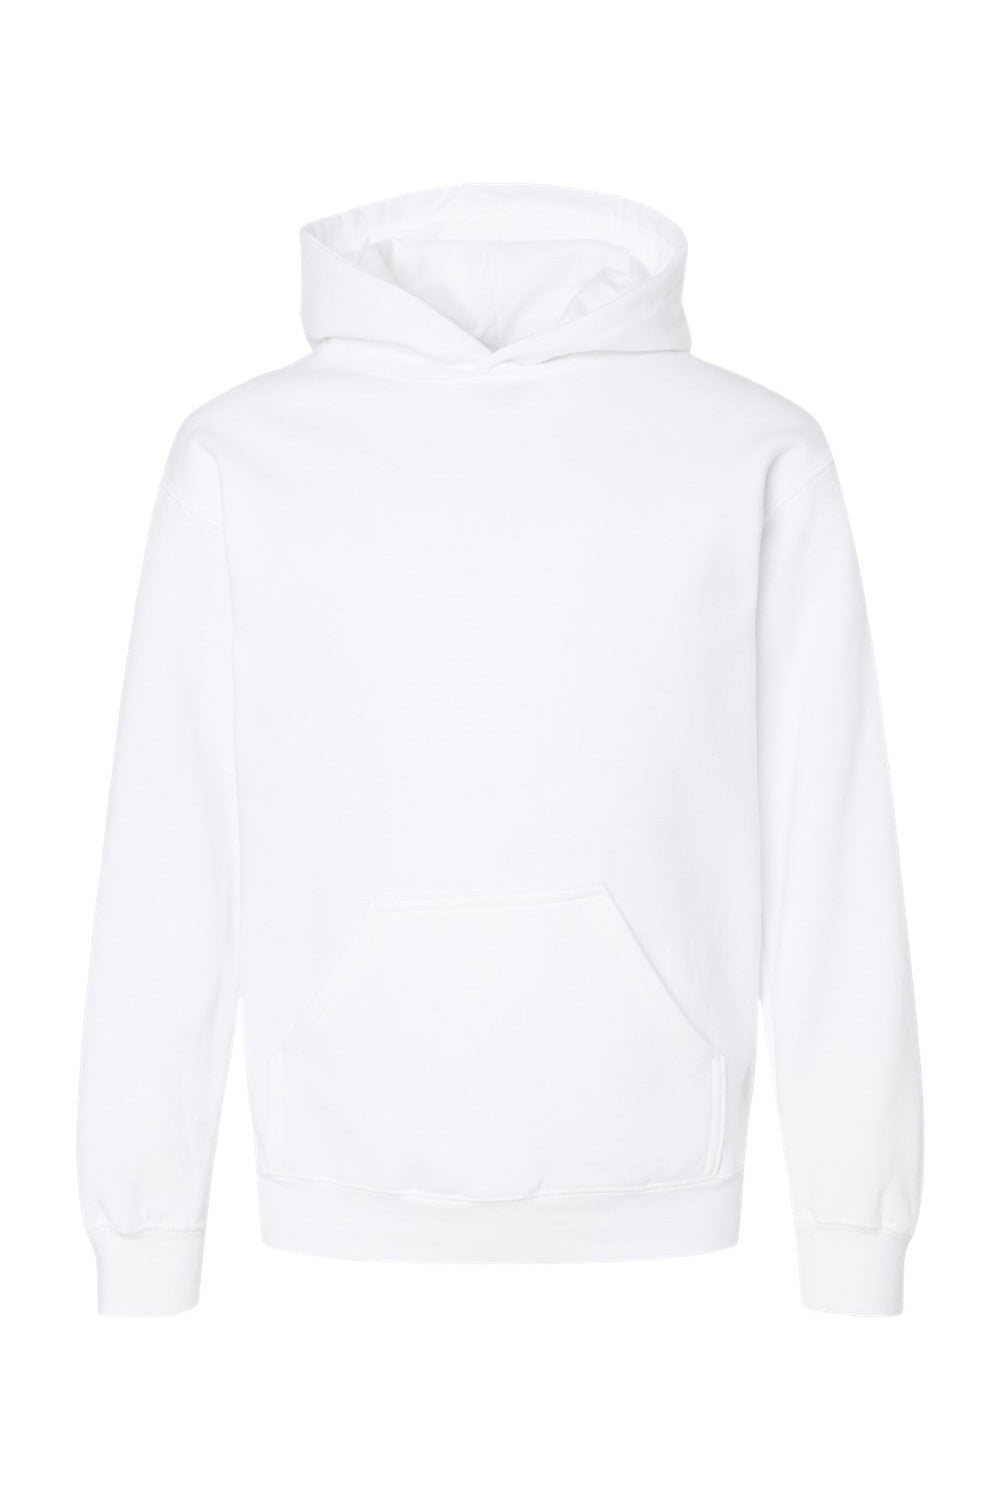 Tultex 320Y Youth Hooded Sweatshirt Hoodie White Flat Front